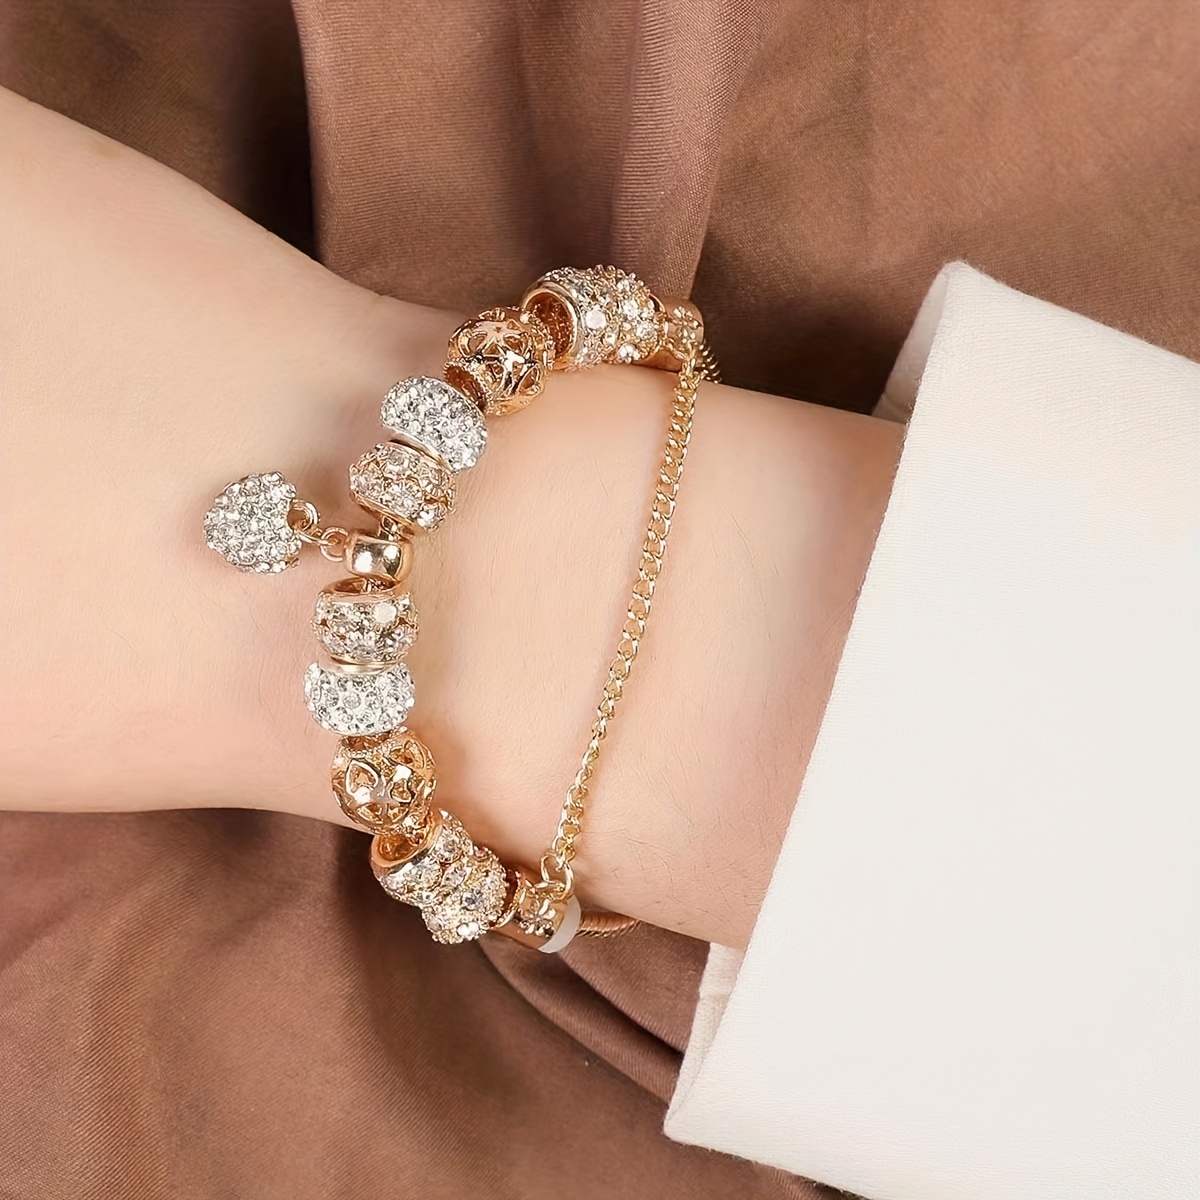 Buy Crystal Jewelry Charm Bracelet for Women Chain Bracelets Girls